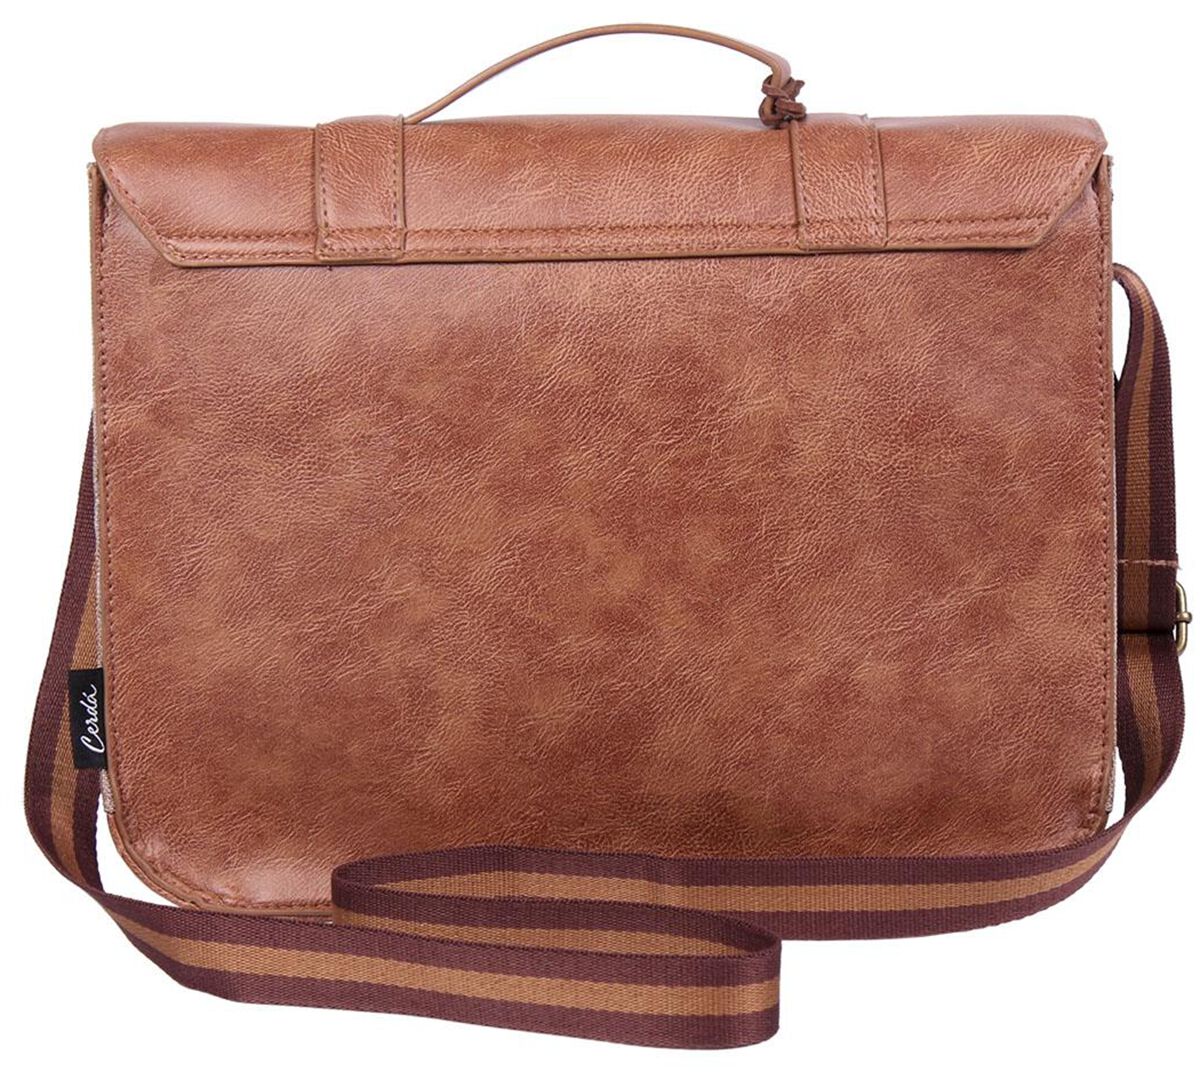 Harry Potter 9 3/4 Deluxe Mini Brief Handbag Purse Satchel